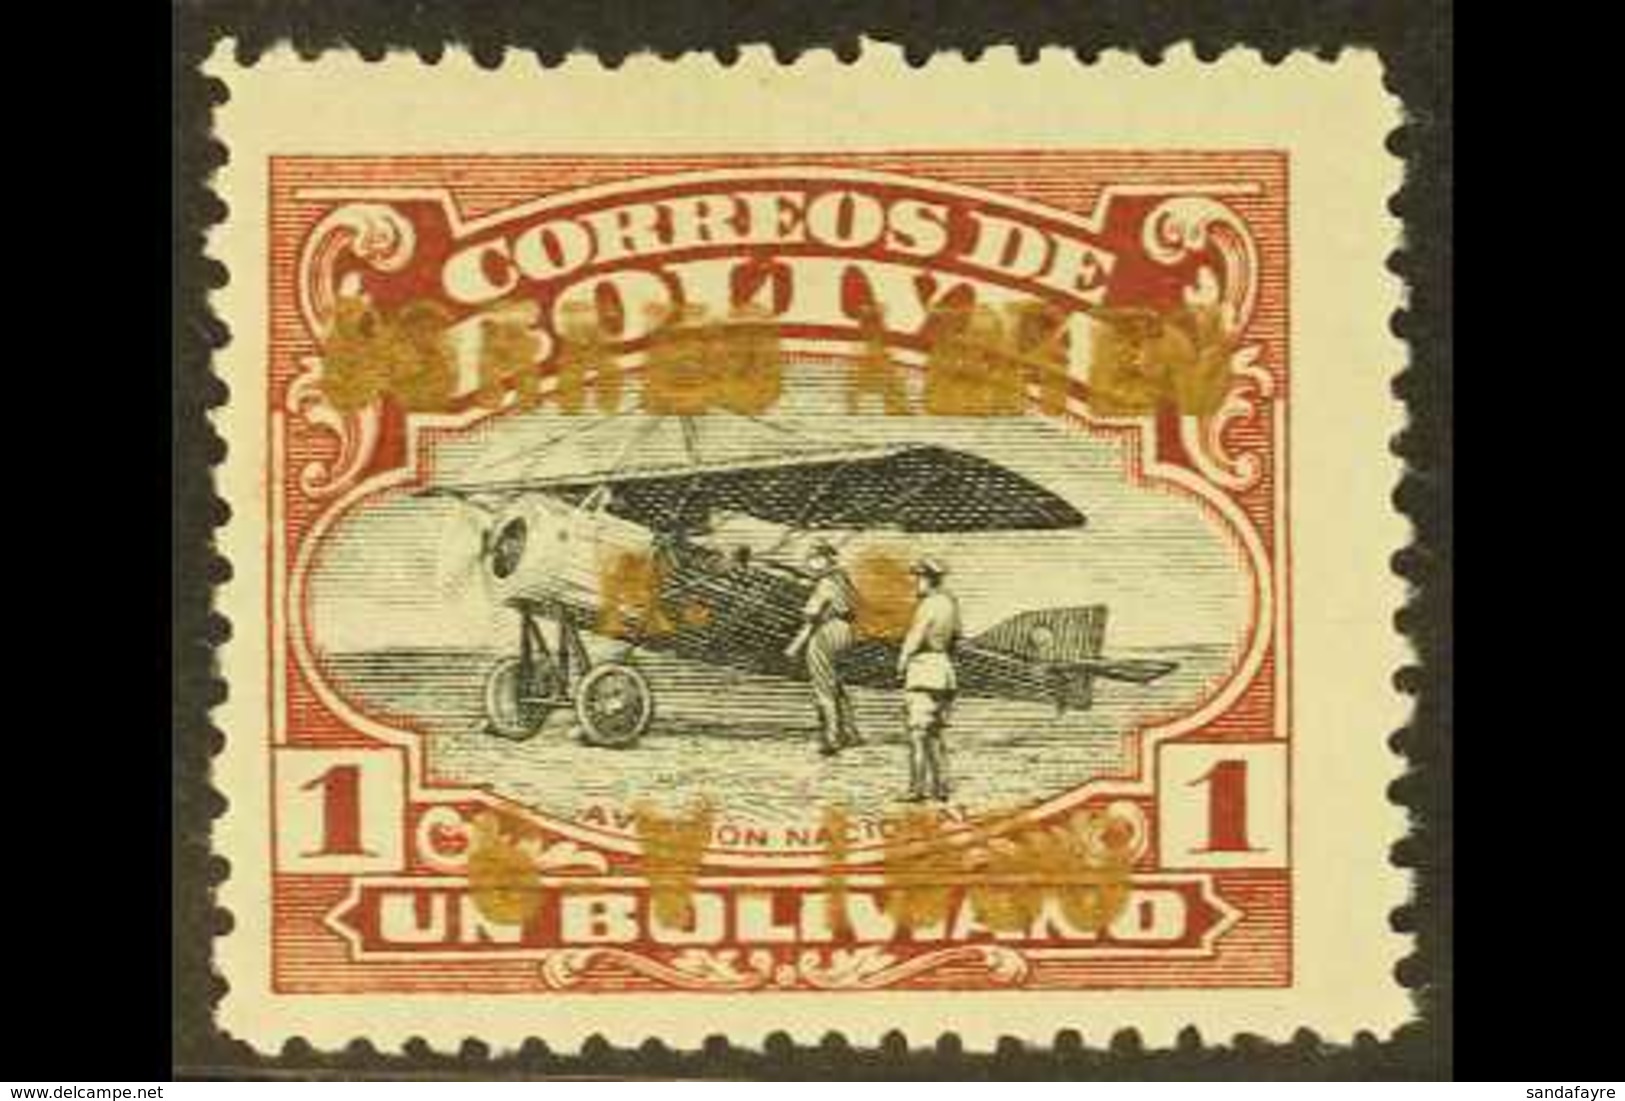 1930 1b Red-brown & Black Air "CORREO AEREO" Overprint In BRONZE (METALLIC) INK (Scott C23, SG 240), Fine Mint, Very Fre - Bolivie